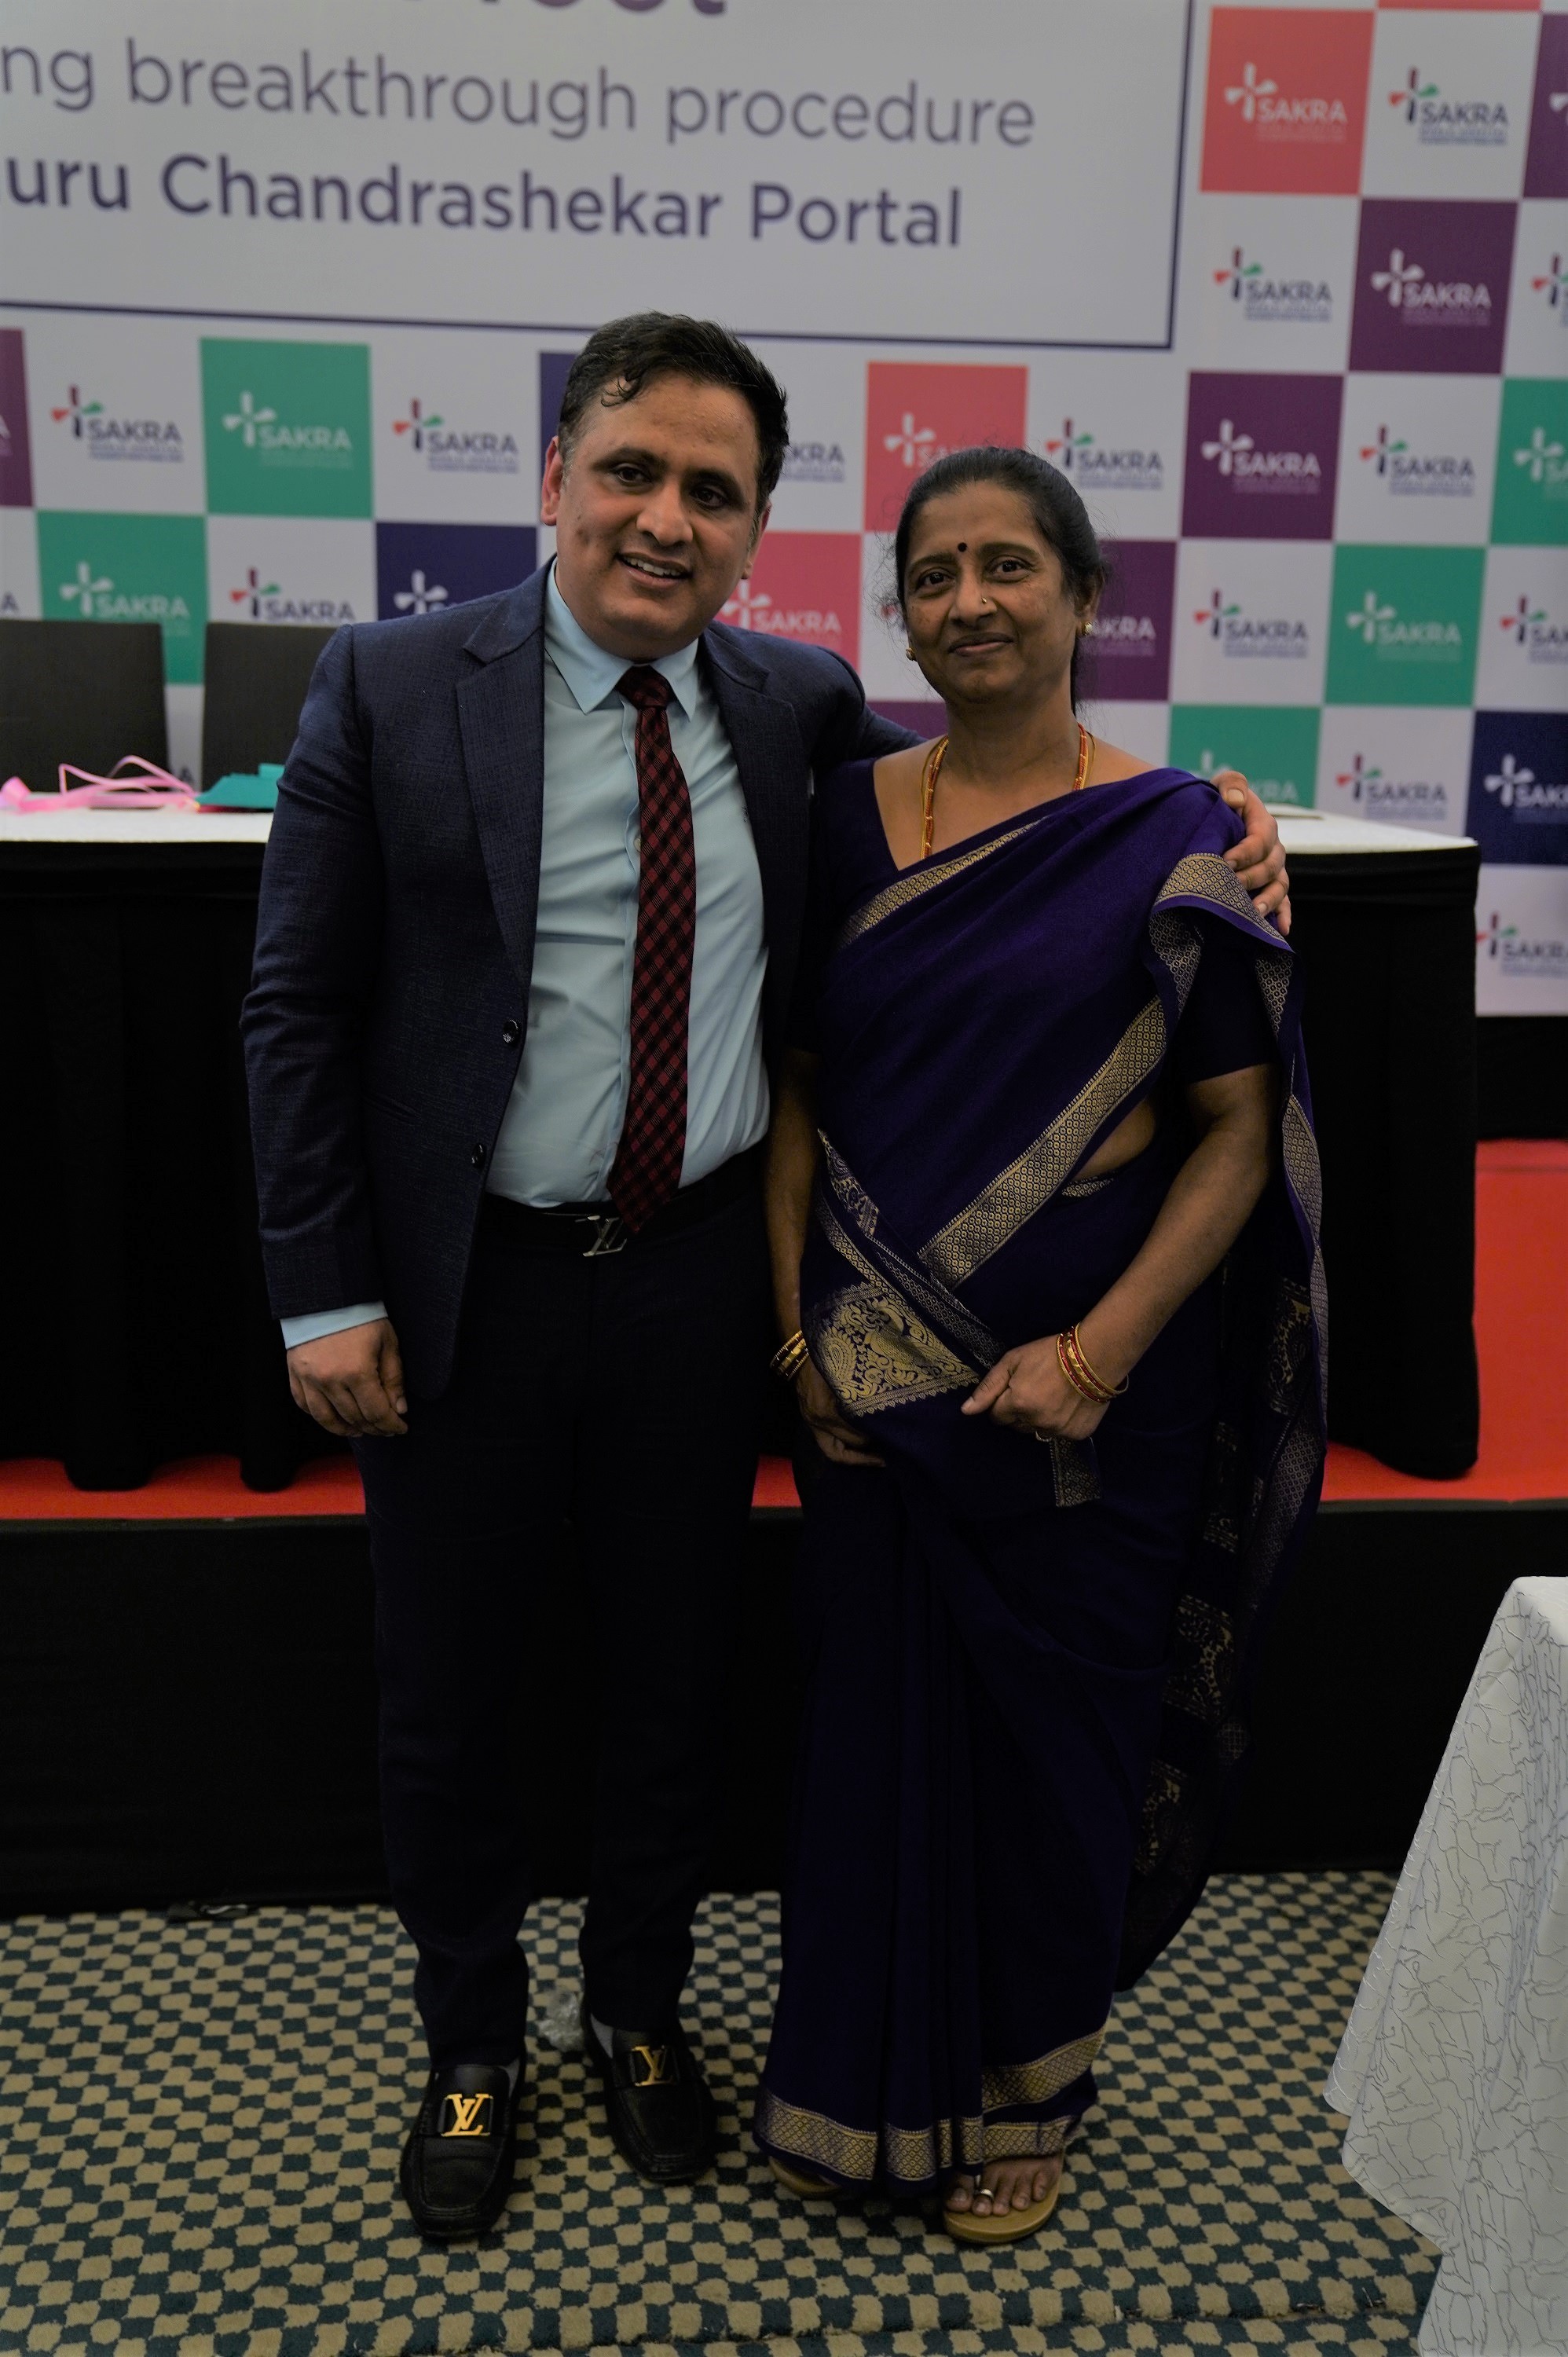 Dr Chandrashekar P, Sr. Consultant & HOD – Orthopaedics, Sakra World Hospital with Mrs. Ganga Shivkumar, the patient.